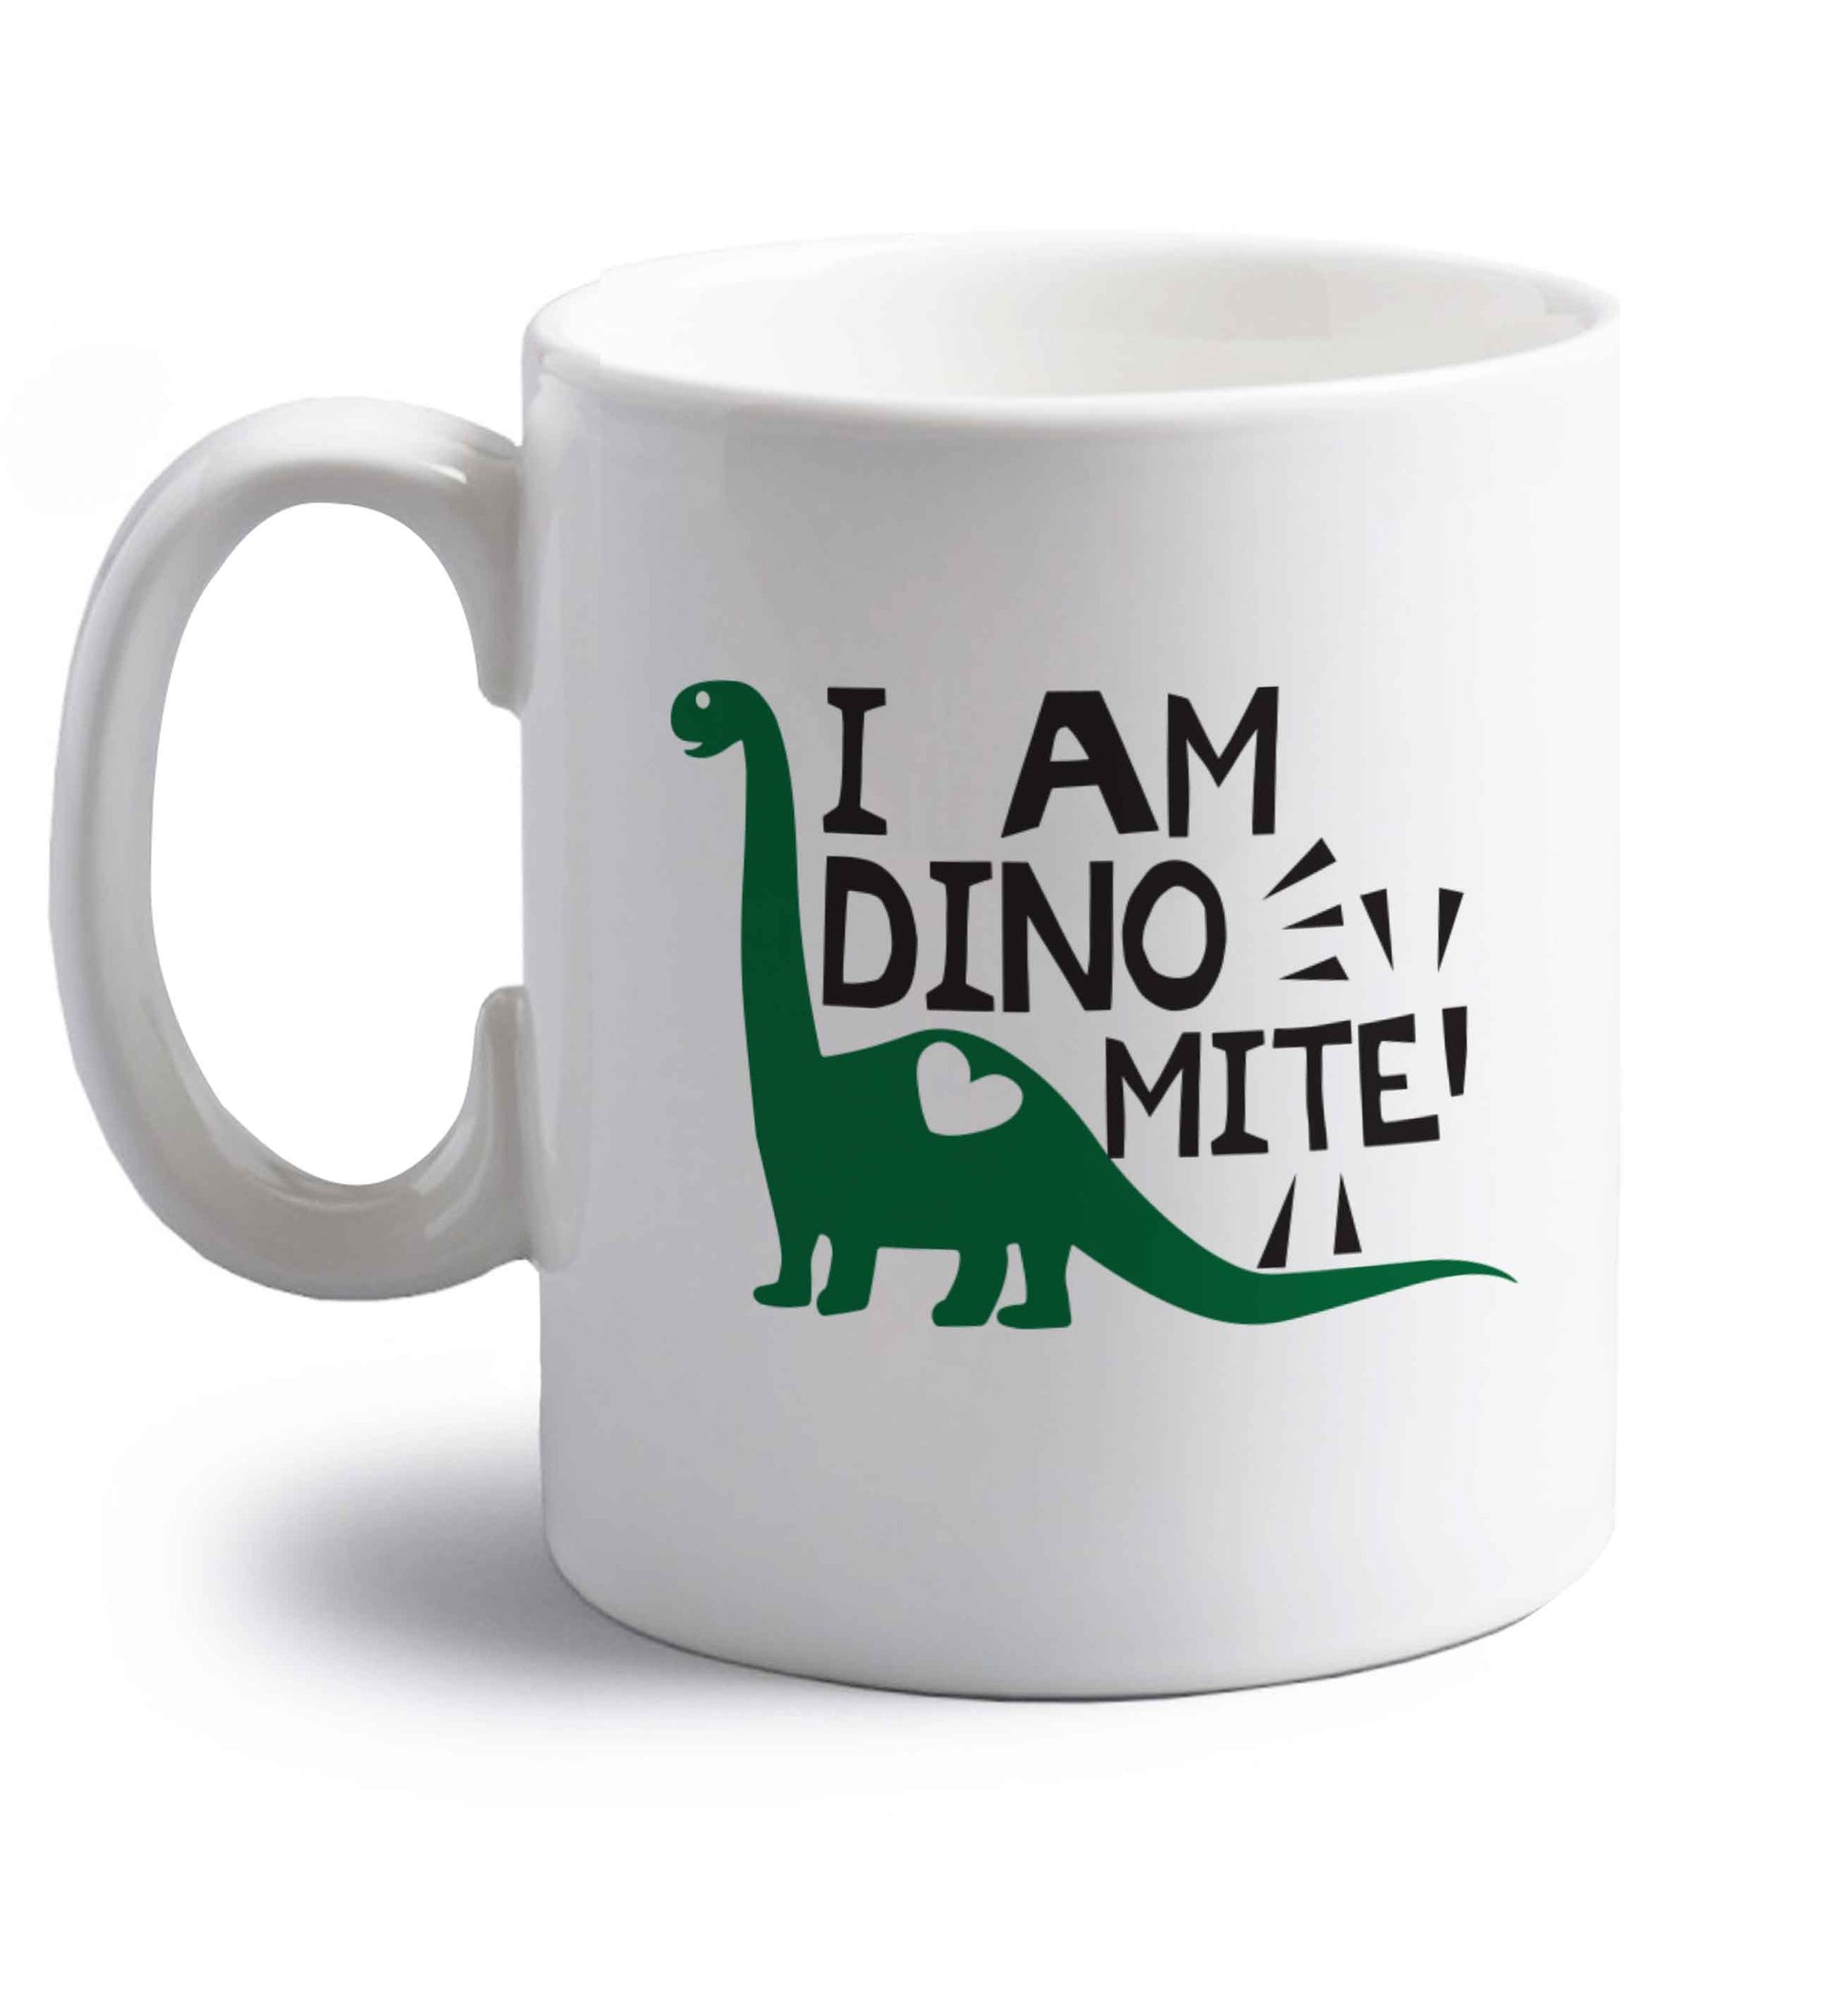 I am dinomite! right handed white ceramic mug 